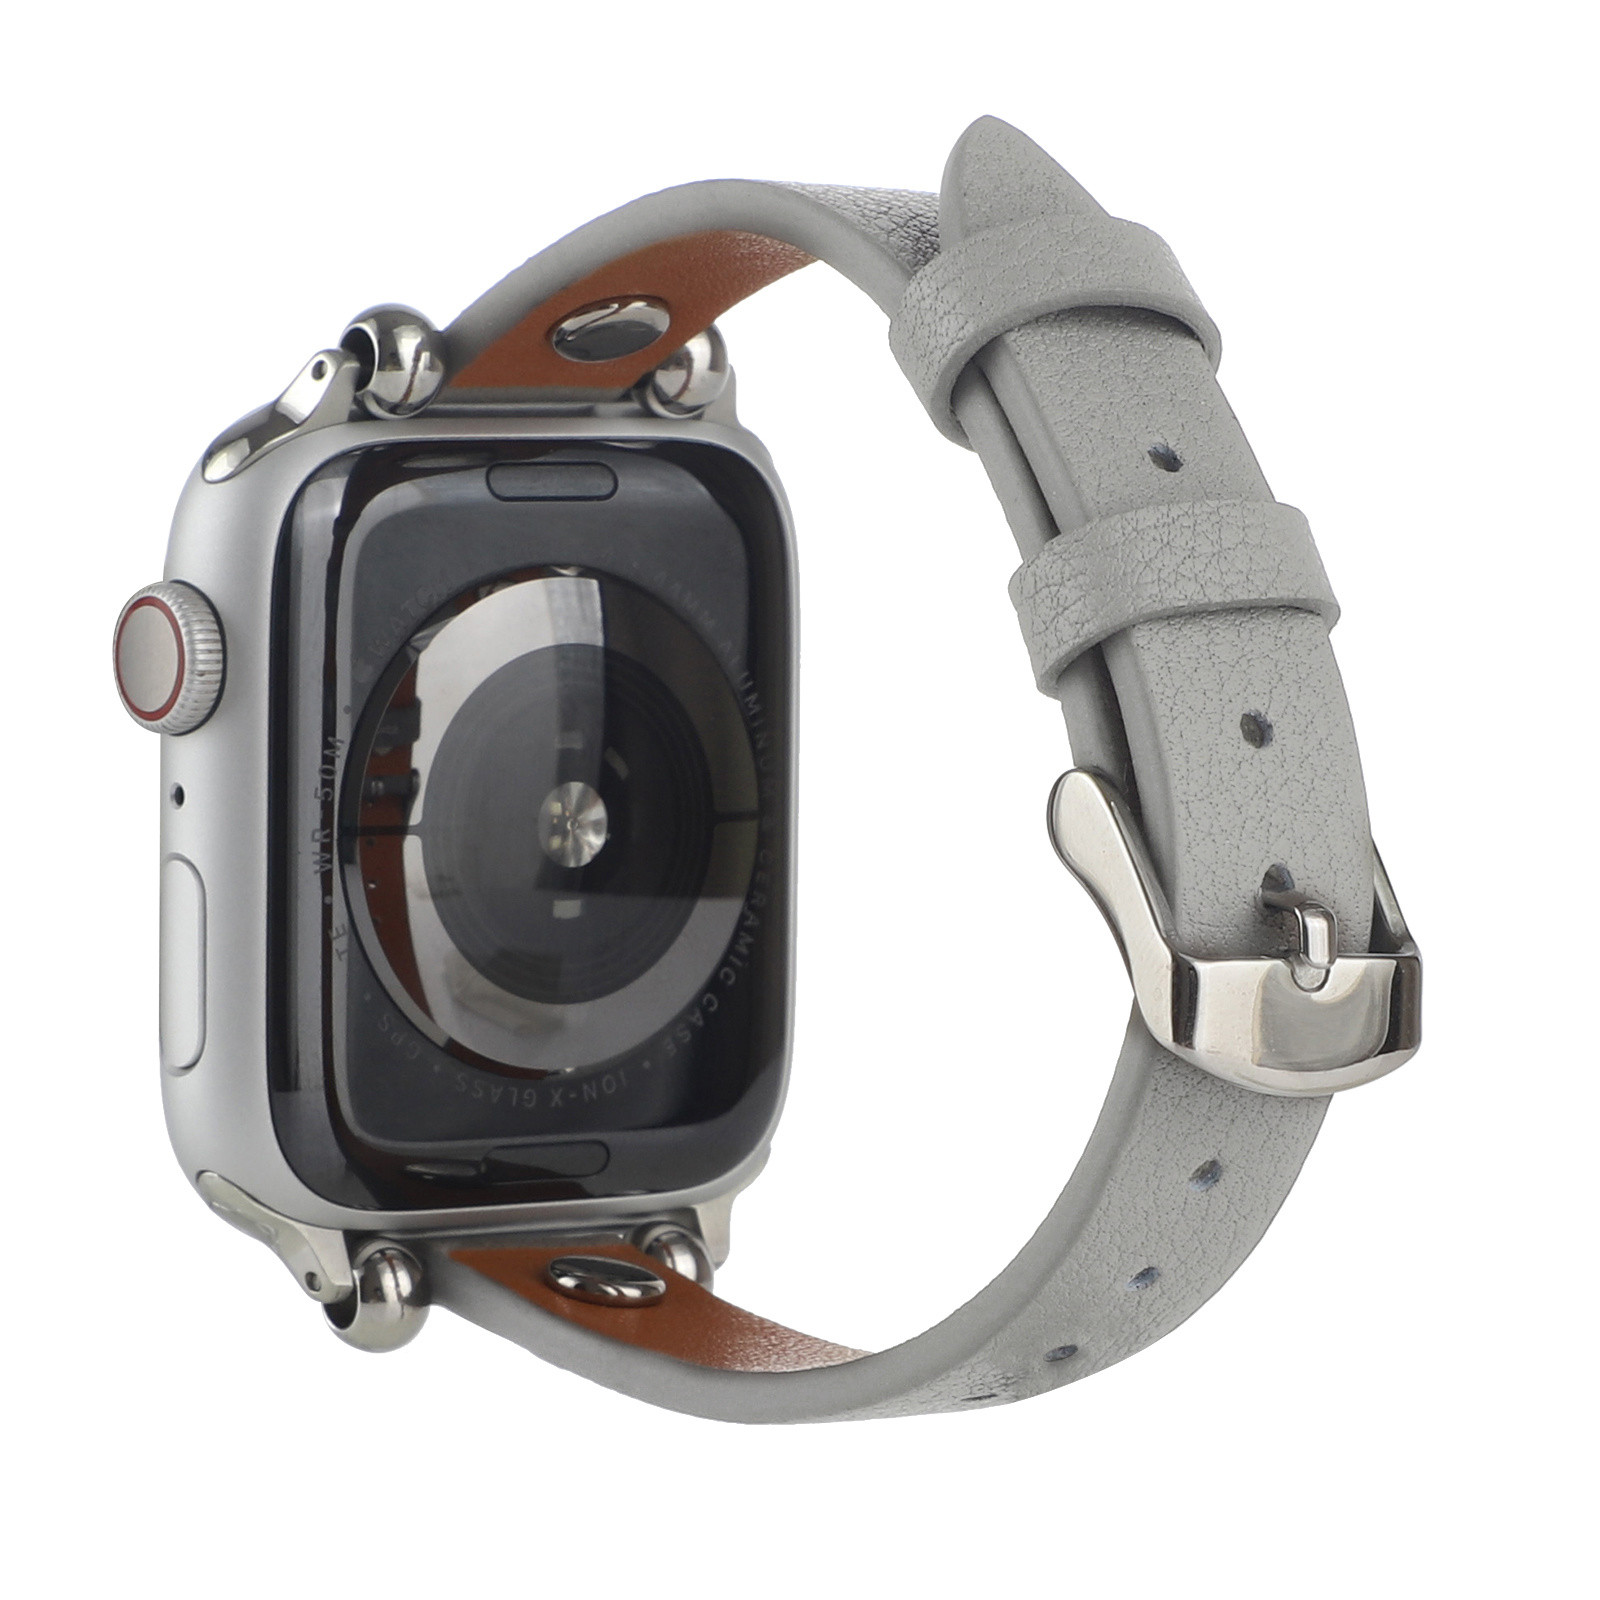  Apple Watch vékony bőrszíj - szürke